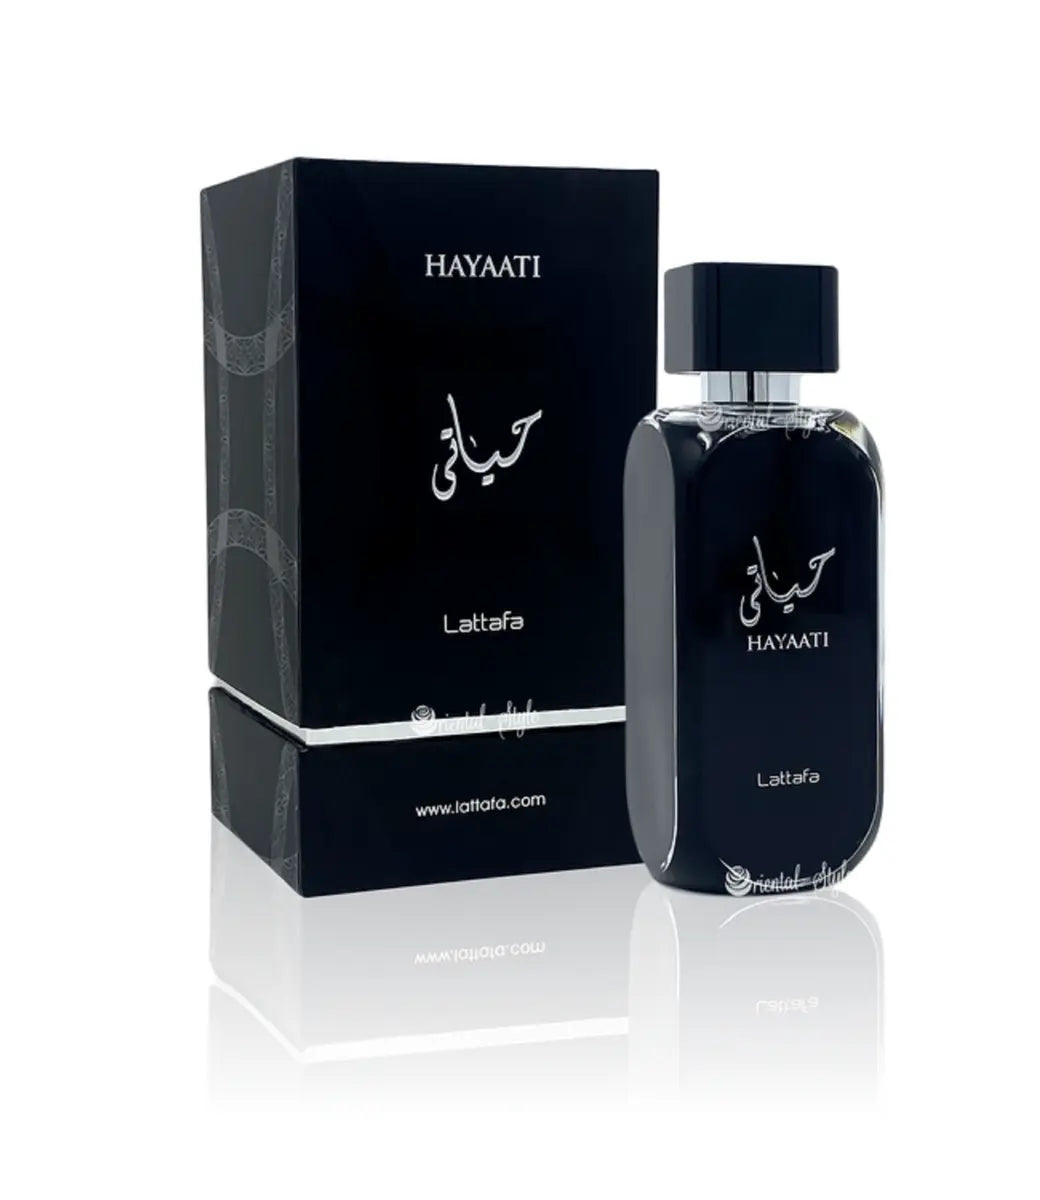 Hayaati EDP (100ml) perfume spray by Lattafa | Khan El Khalili